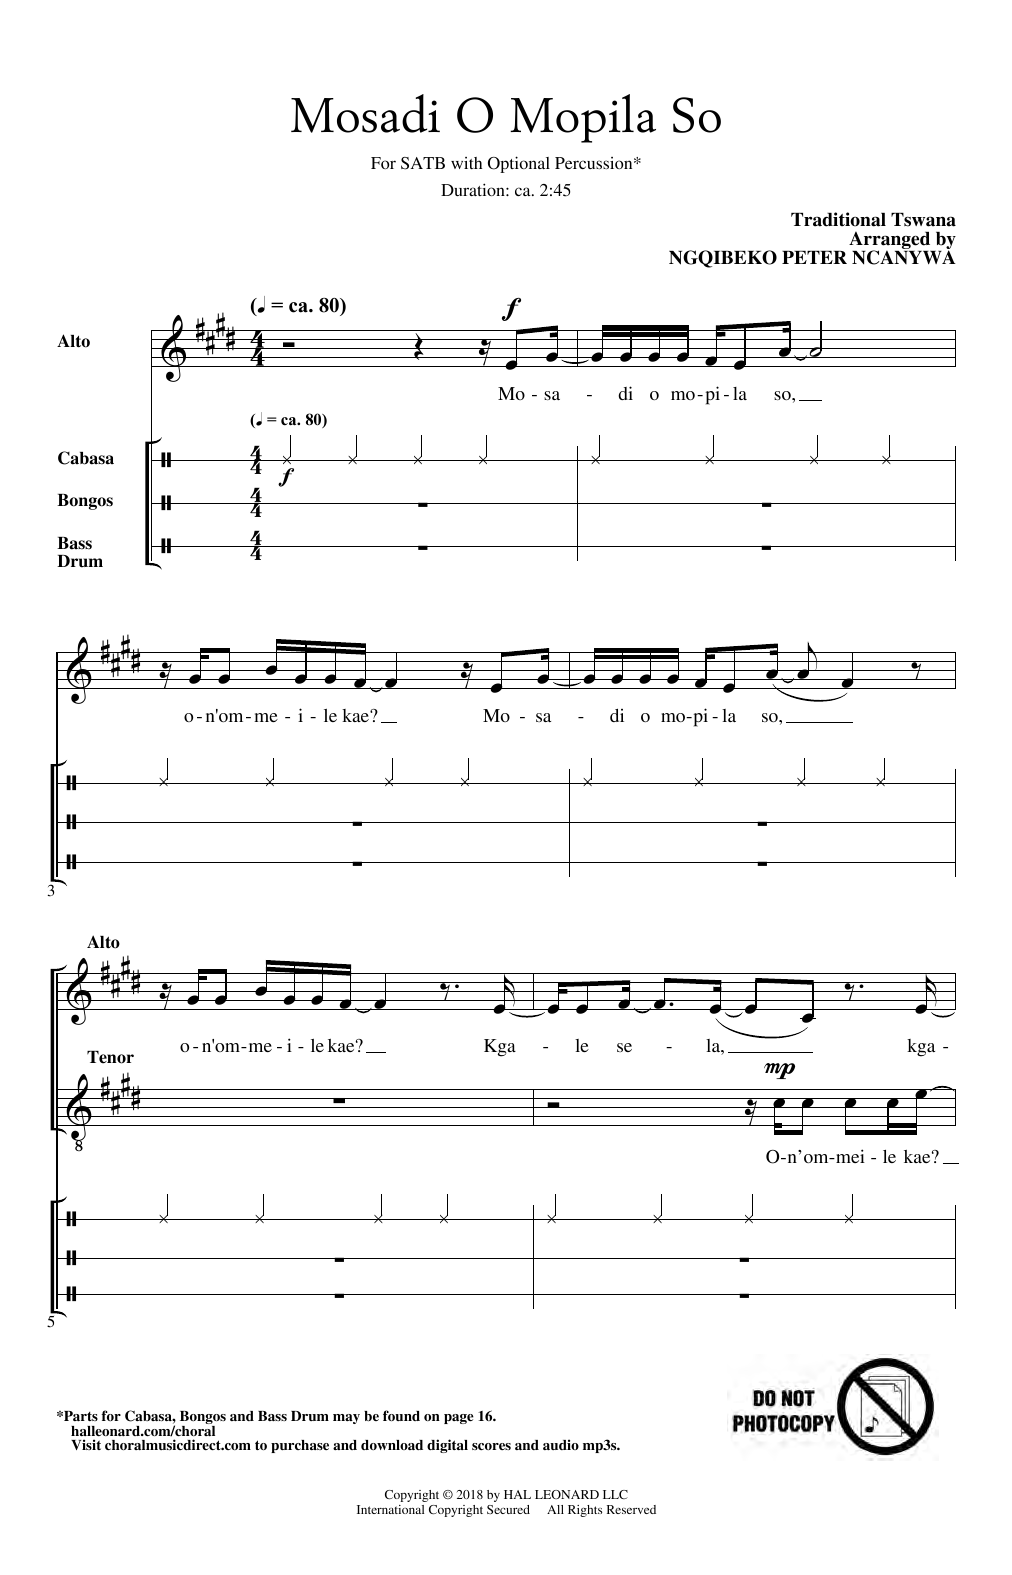 Traditional Tswana Mosadi O Moplisa So (arr. Peter Ncanywa) Sheet Music Notes & Chords for SATB Choir - Download or Print PDF